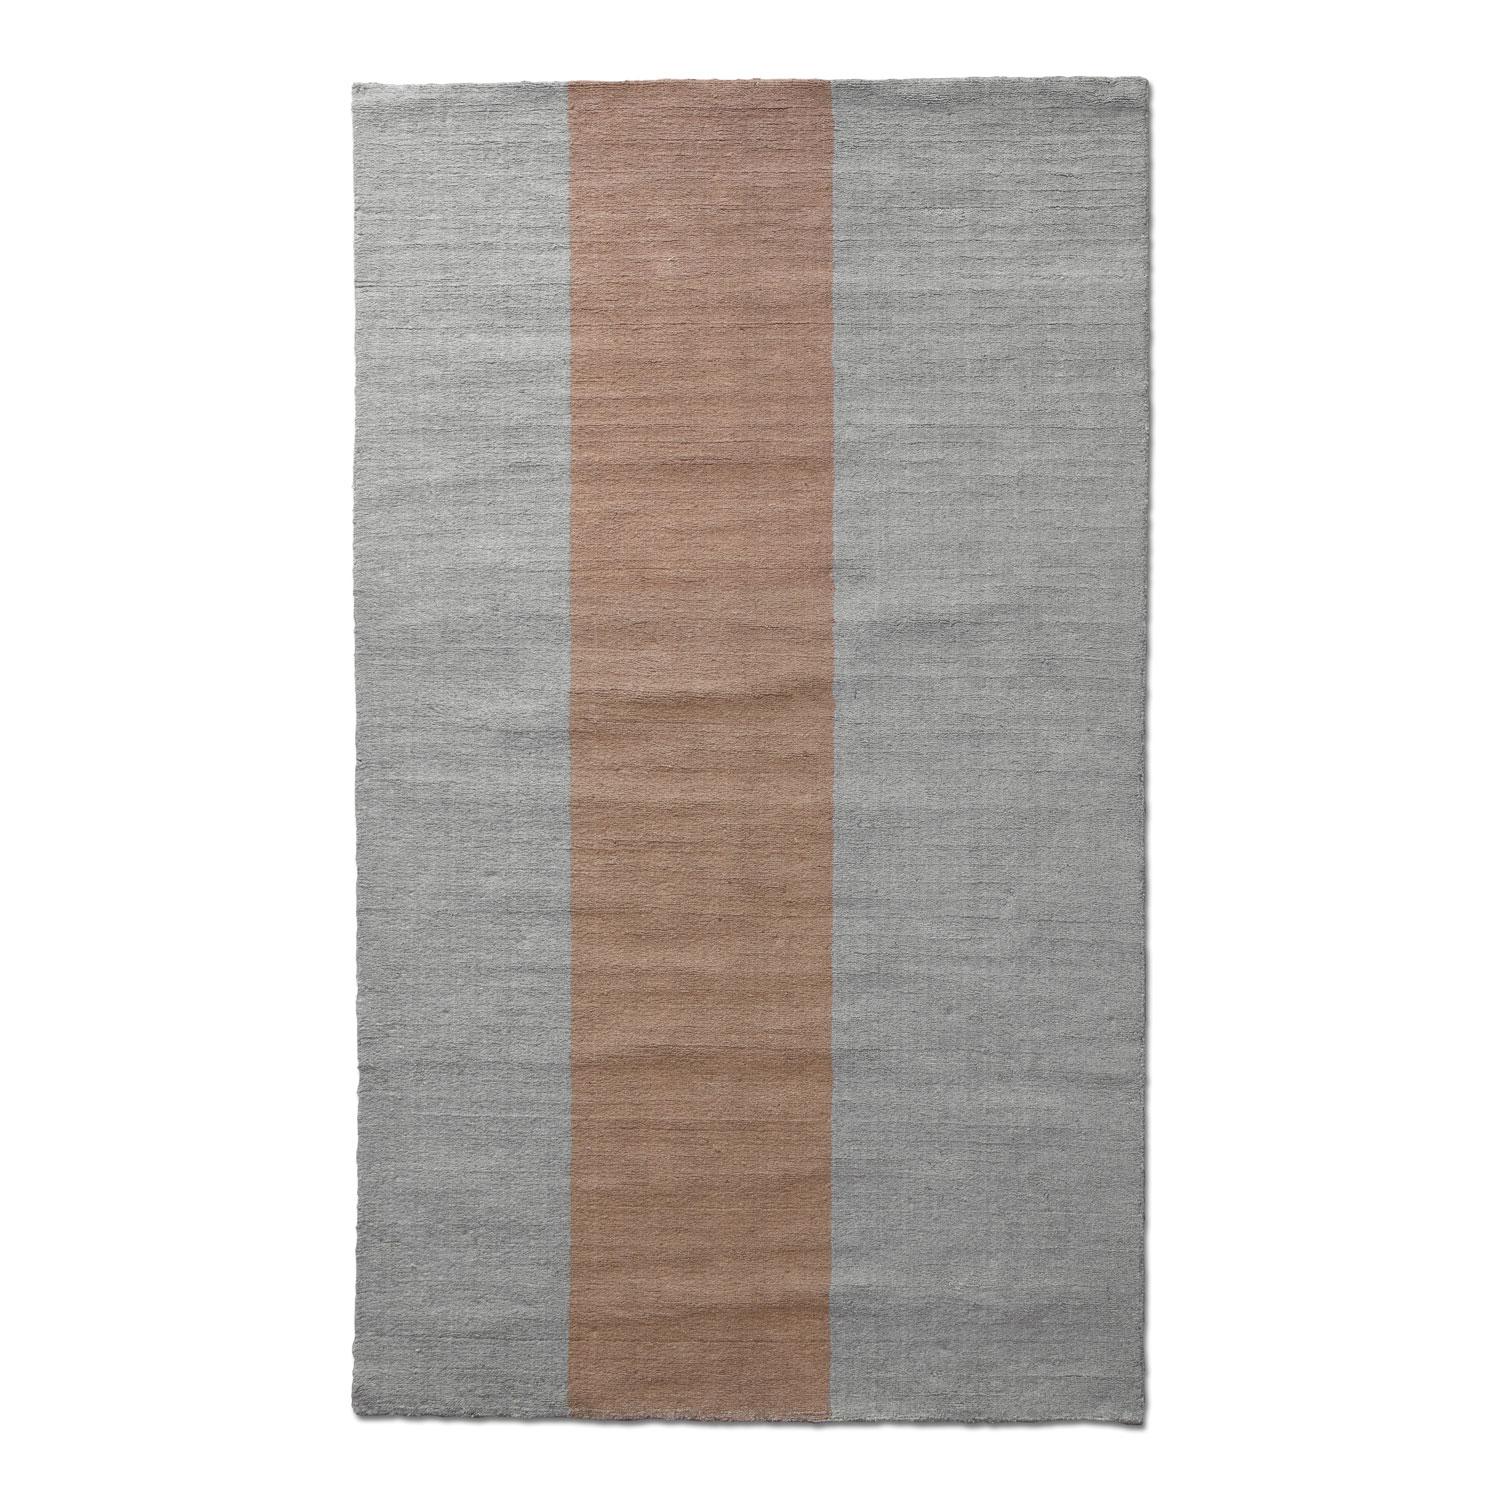 21st Cent Neutral Tones Natural Linen Rug by Deanna Comellini 150x250cm